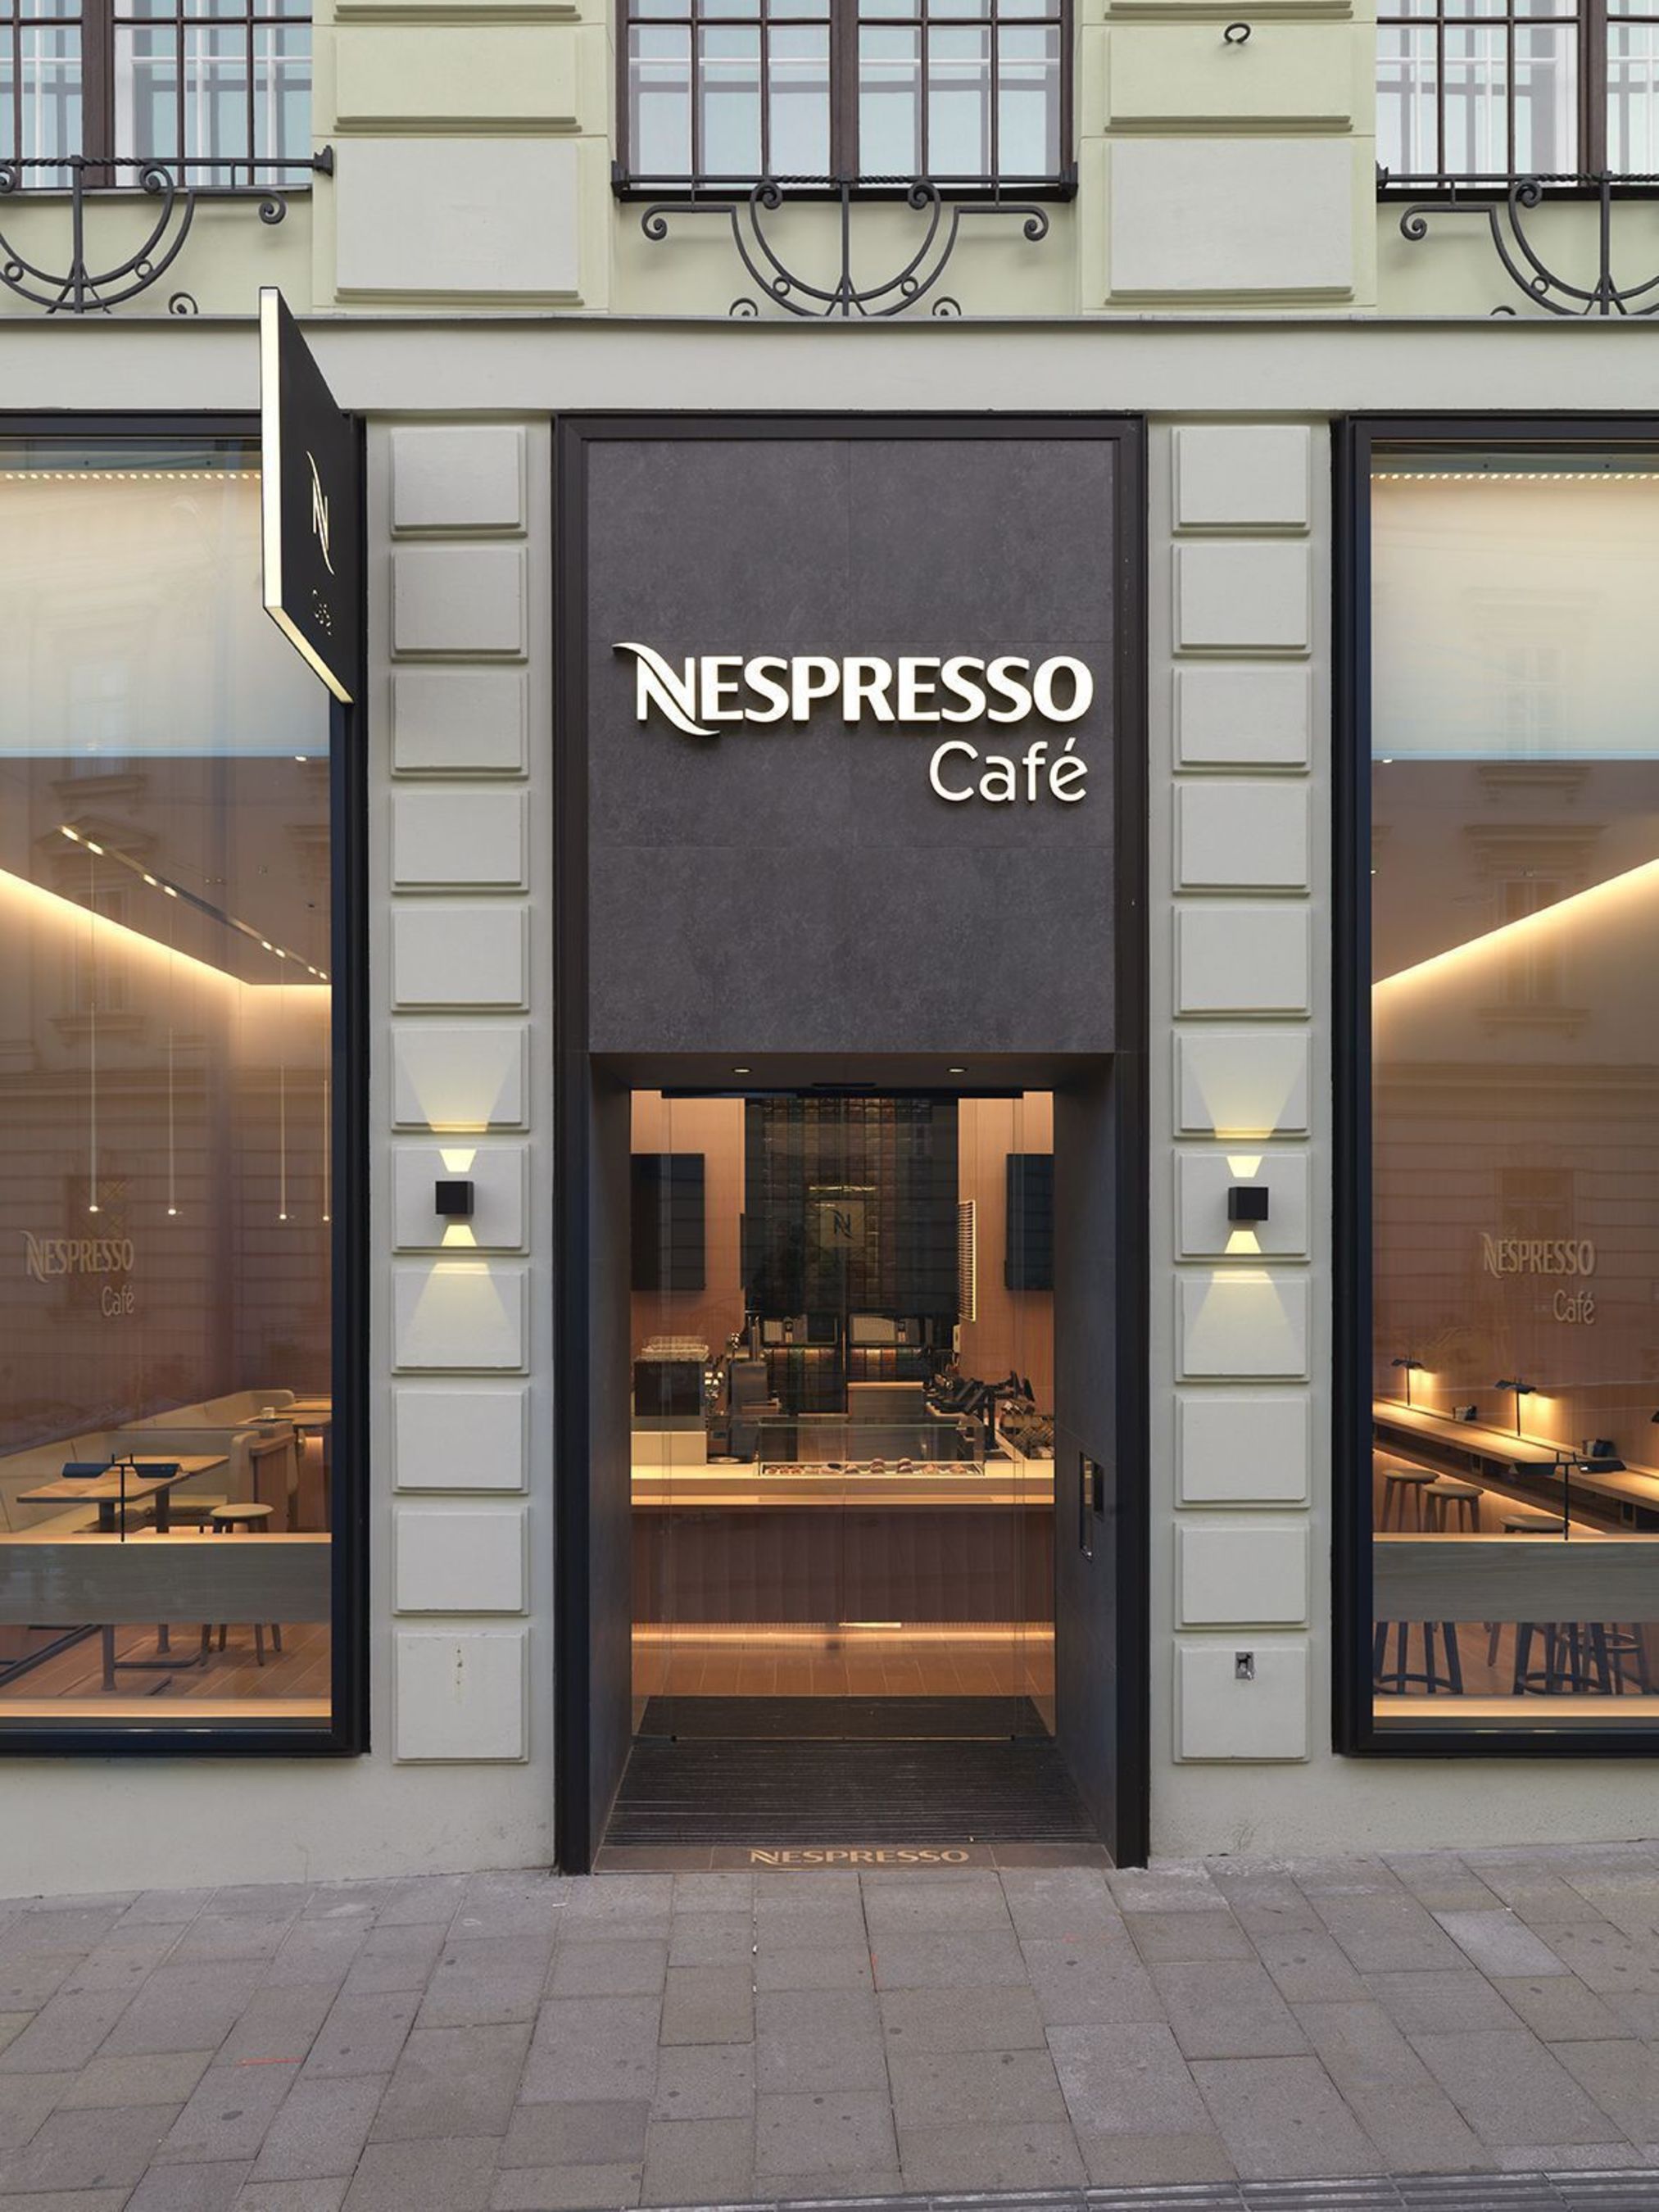 Nespresso brings Viennese consumers a new premium coffee shop experience with its pilot Nespresso Cafe (PRNewsFoto/Nestle Nespresso SA)